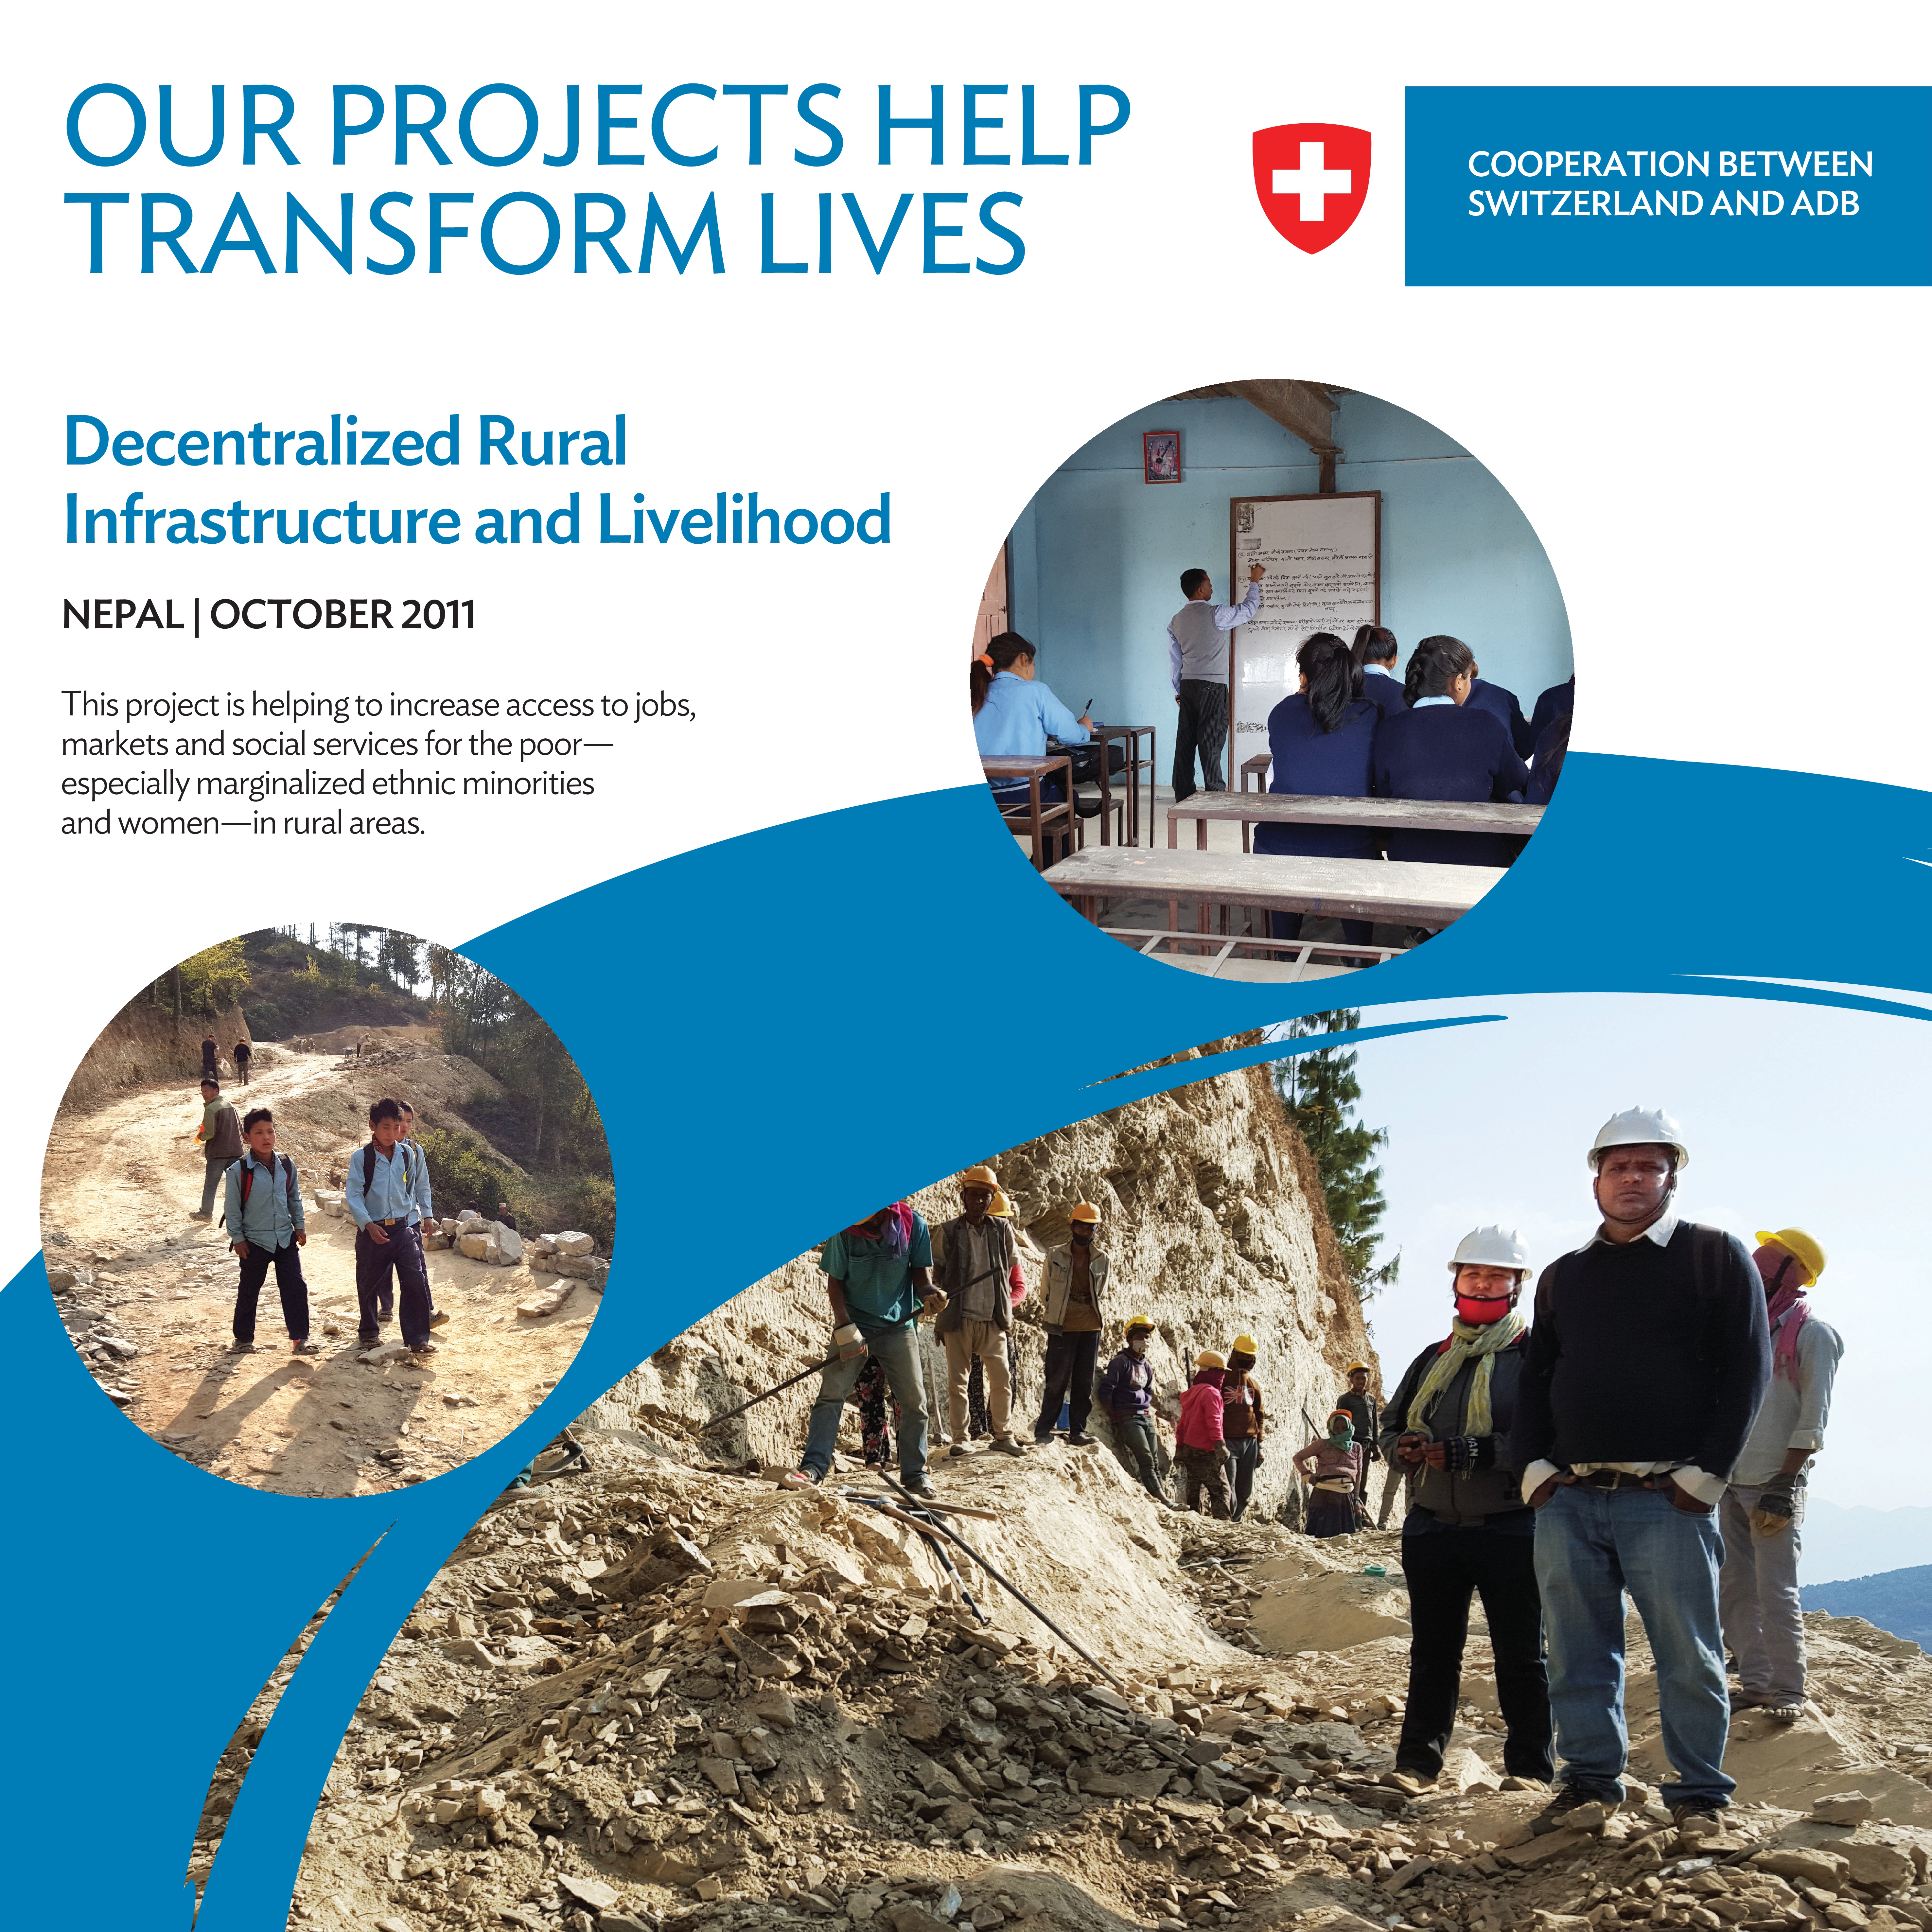 Decentralized Rural Infrastructure and Livelihood, Nepal, October 2011